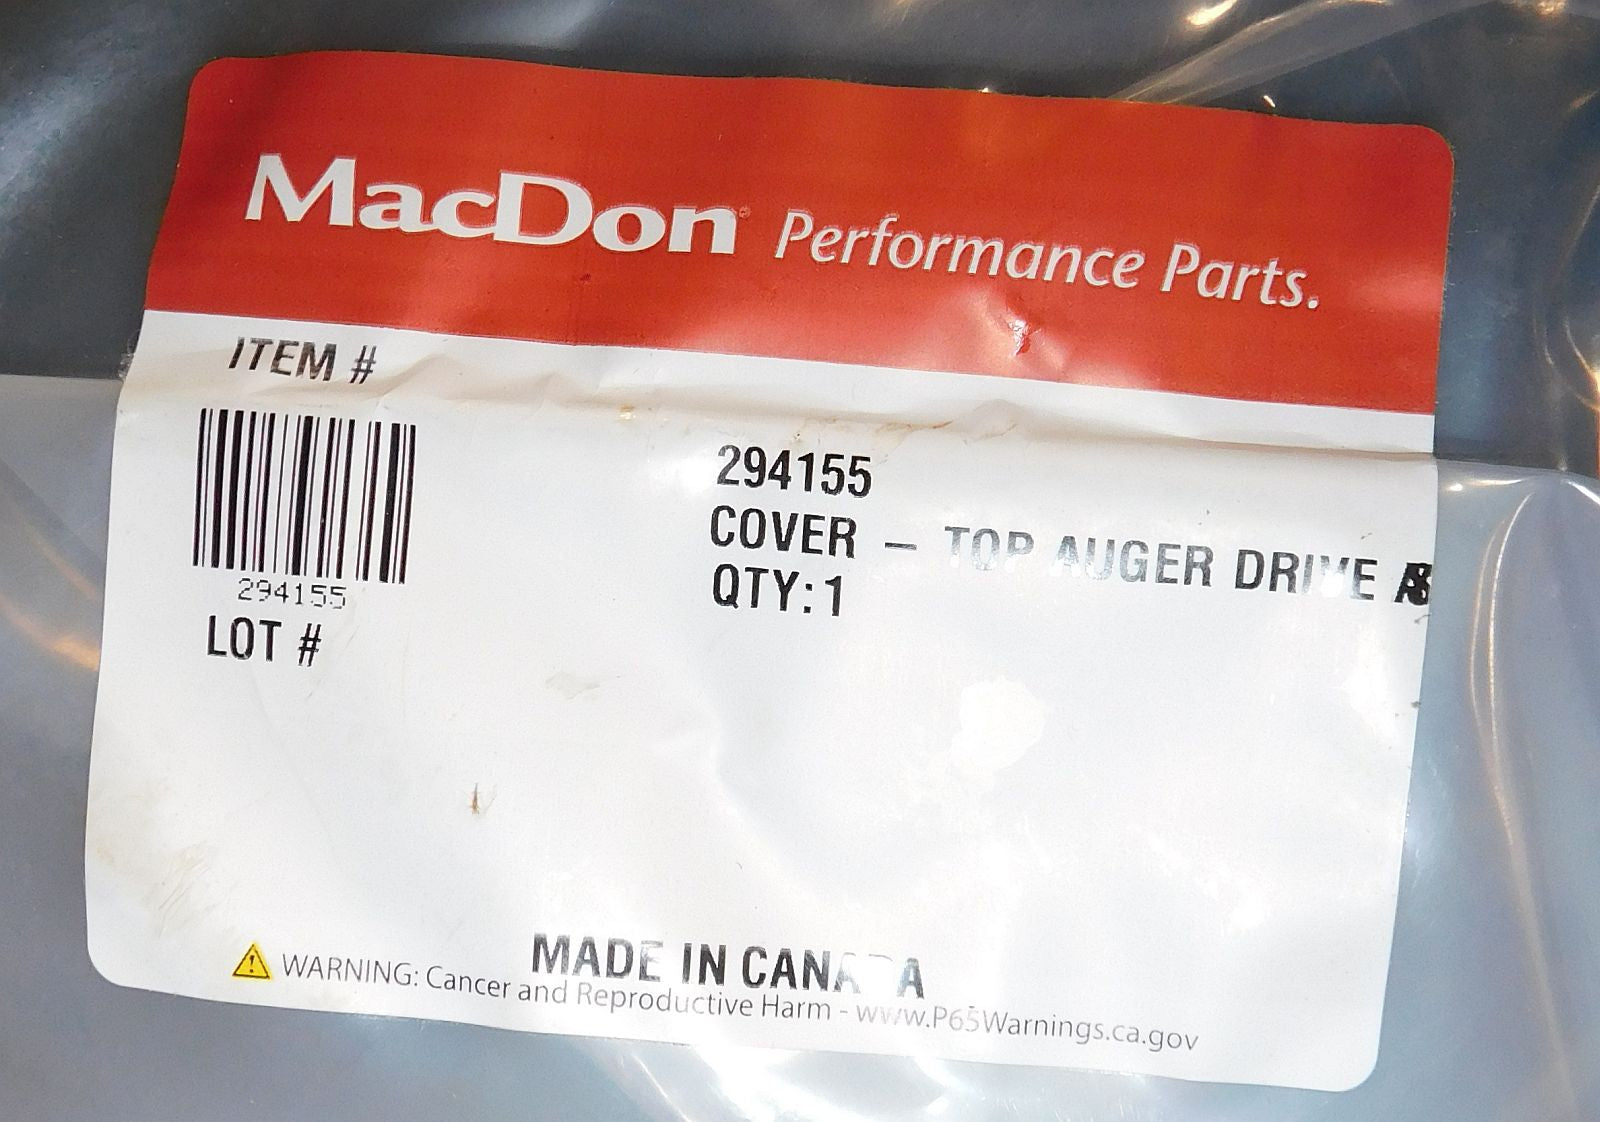 CA25 Combine Adapter MacDon 279708 Auger Drive Kit New